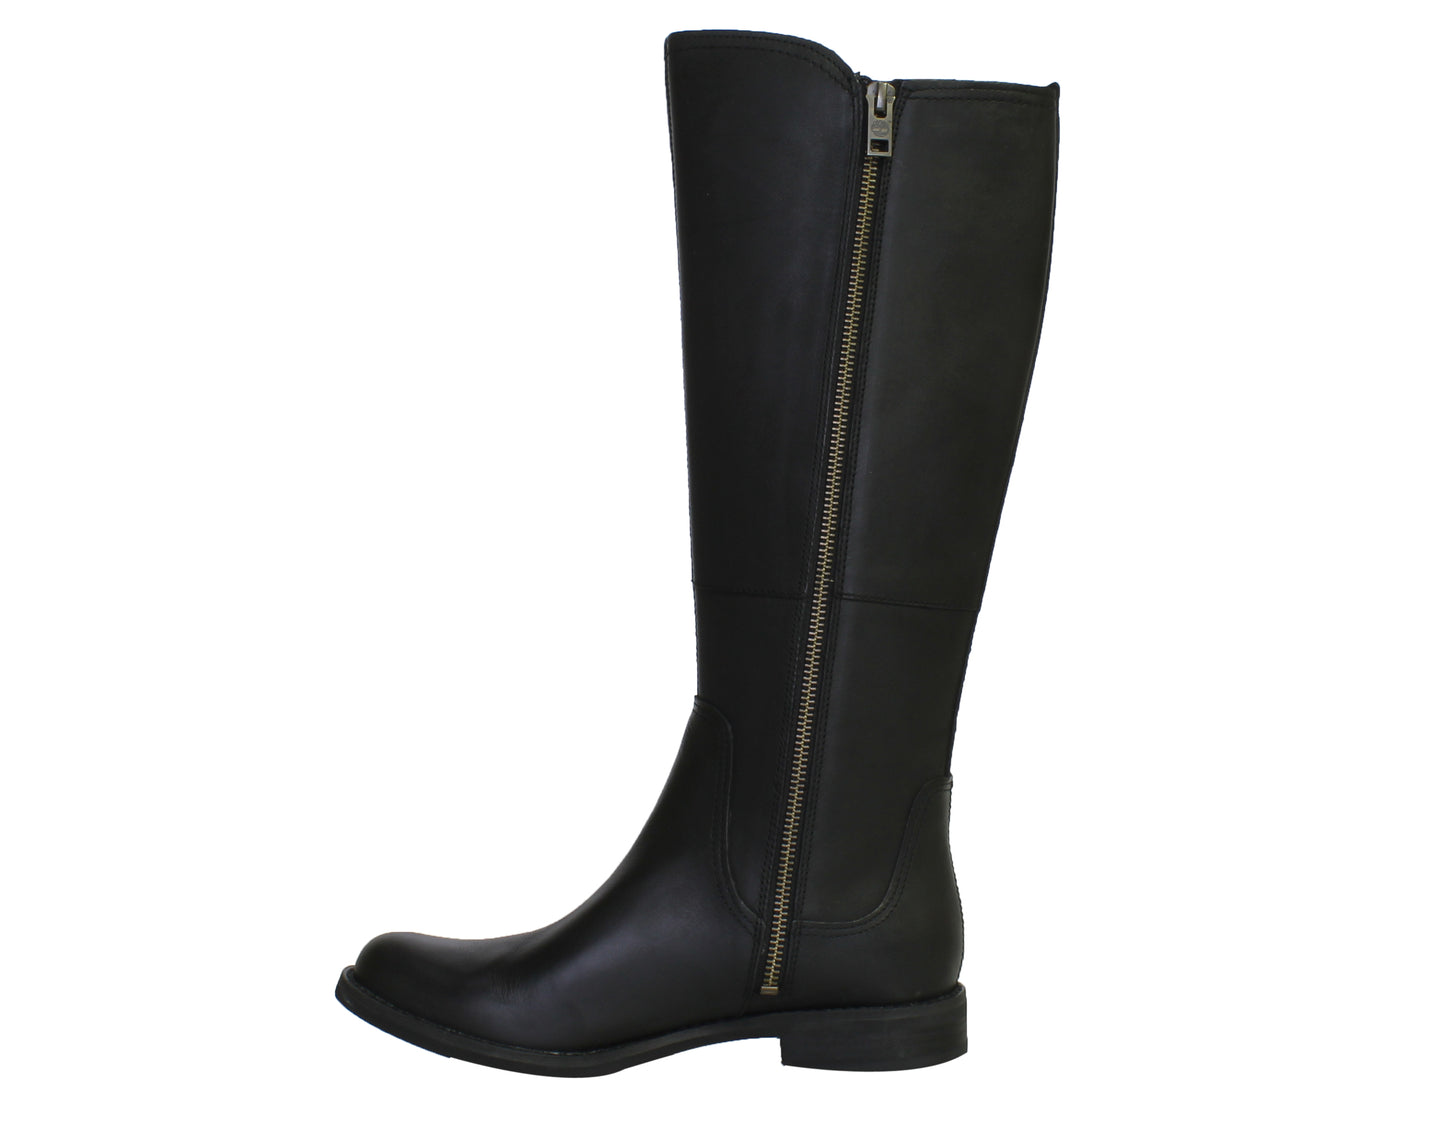 Timberland Savin Hill Tall Medium Shaft Black Women's Riding Boots 8525B